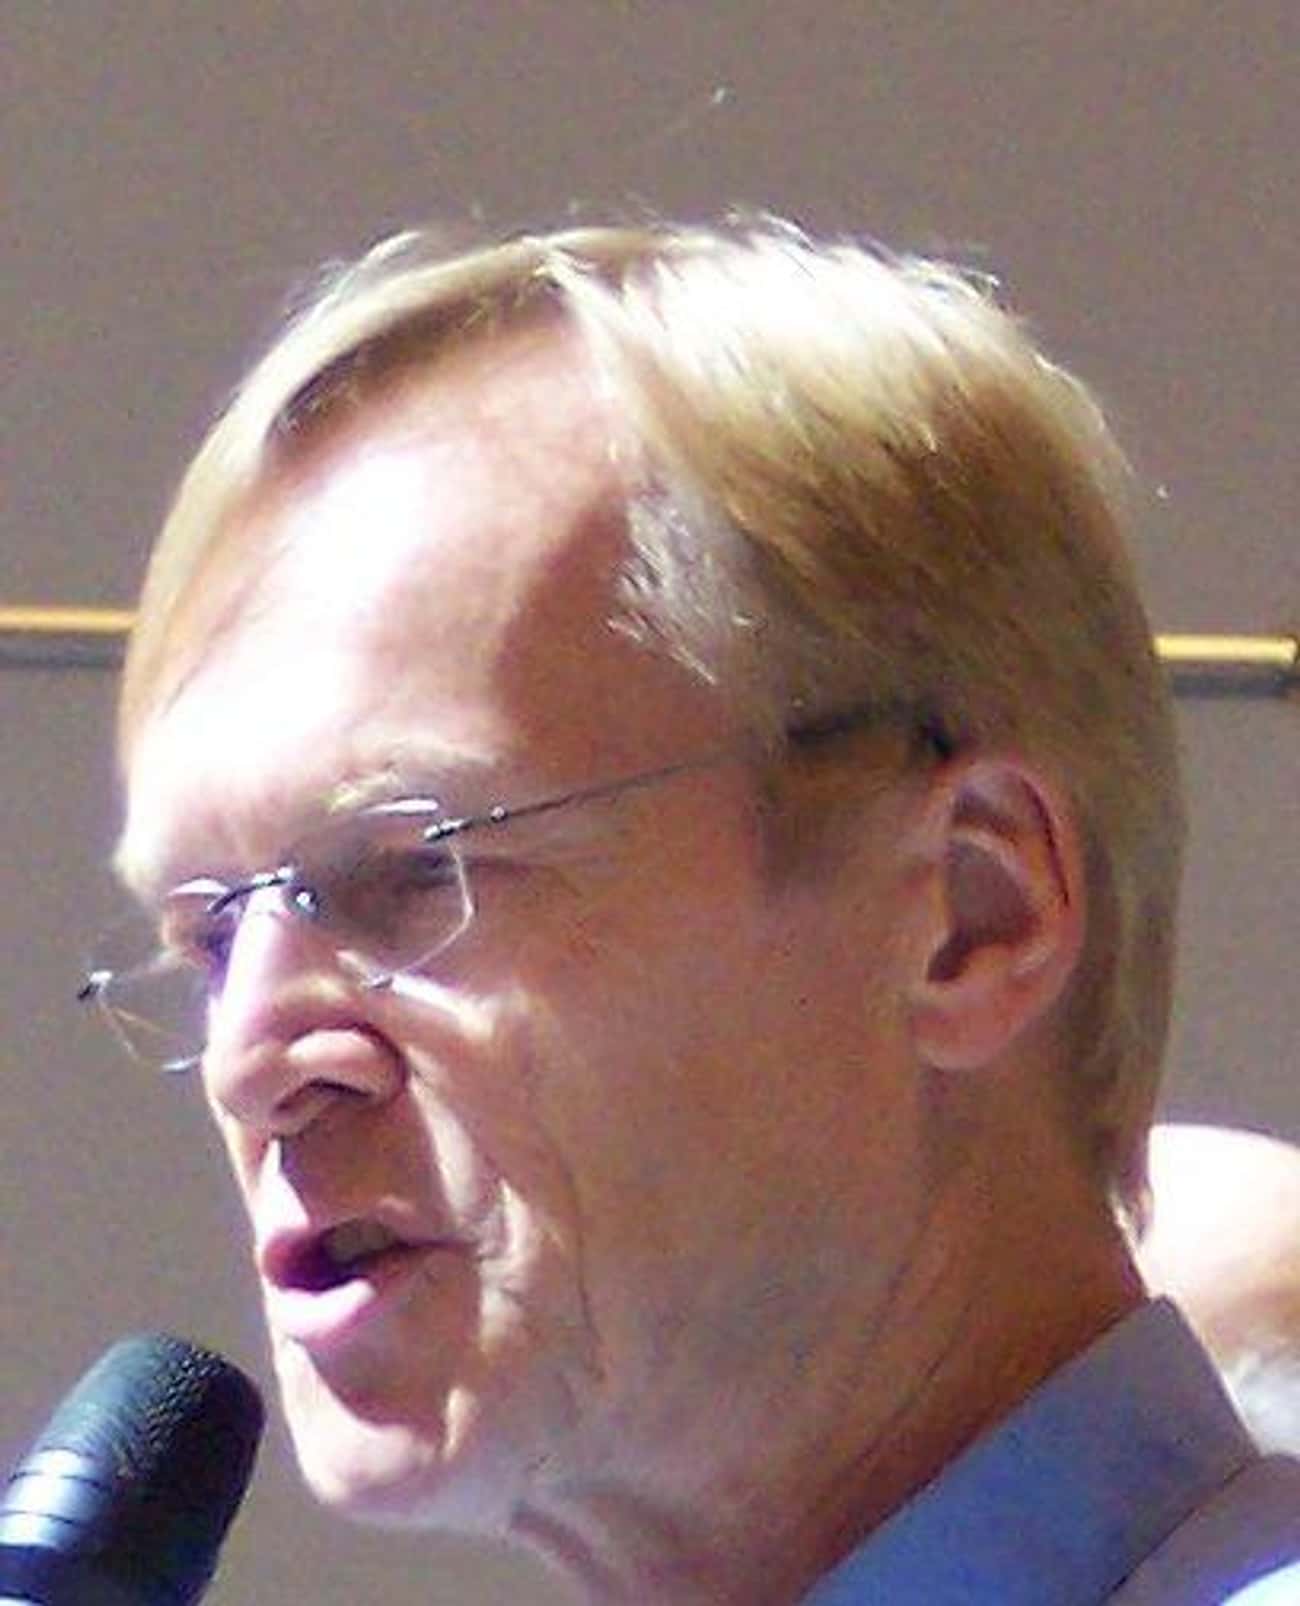 Ari Vatanen